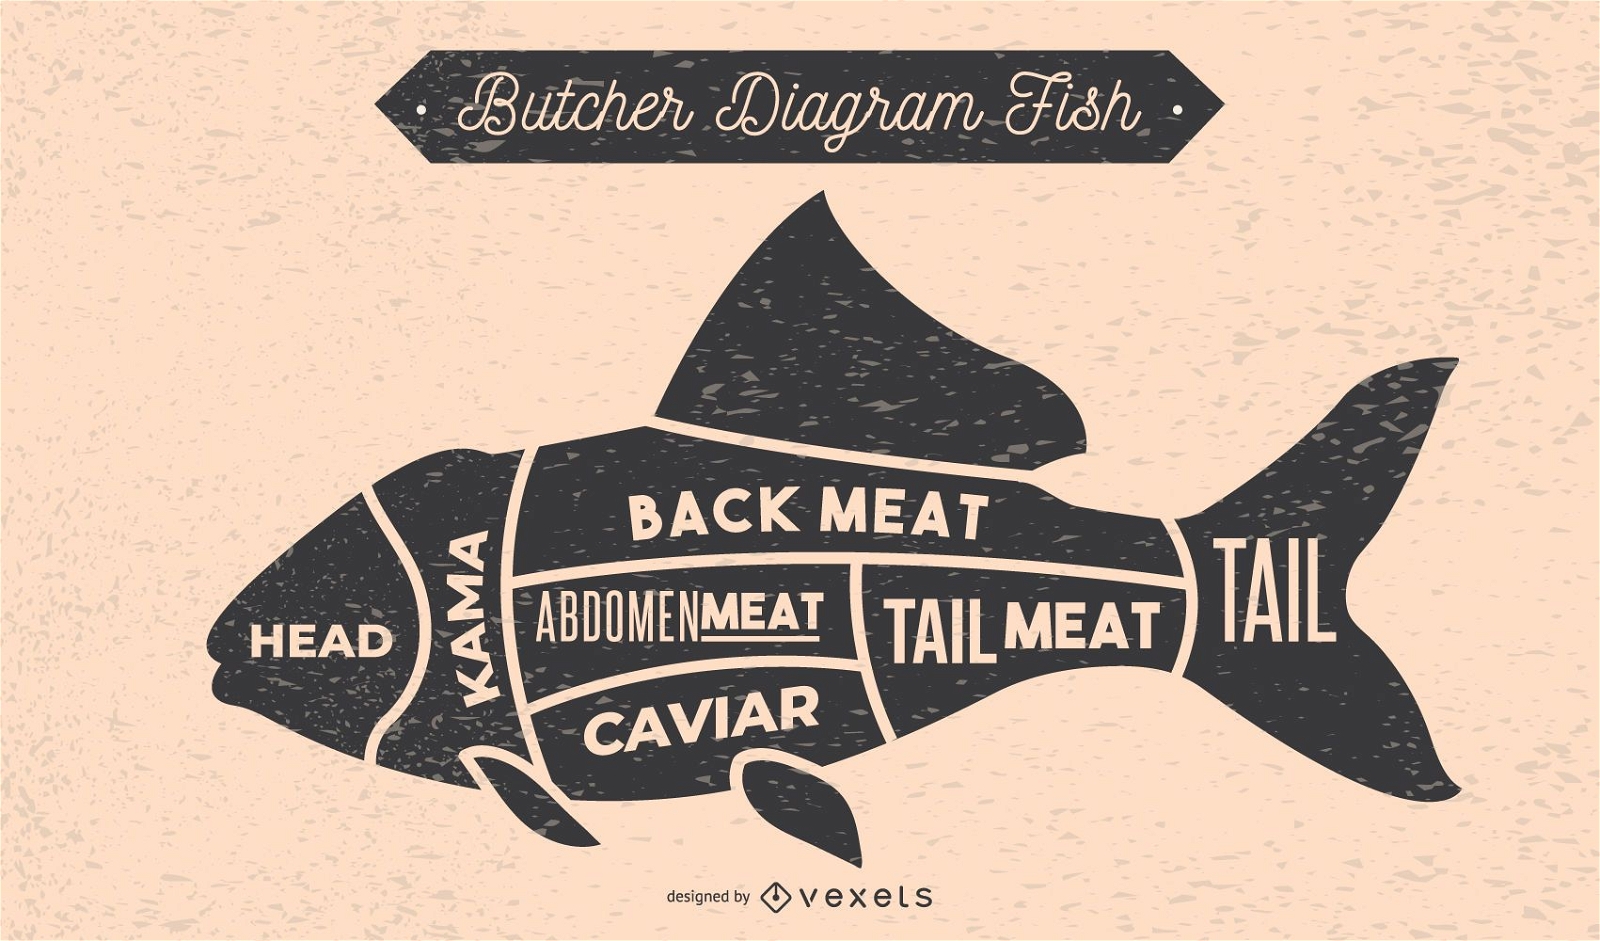 Fish Butcher Diagram